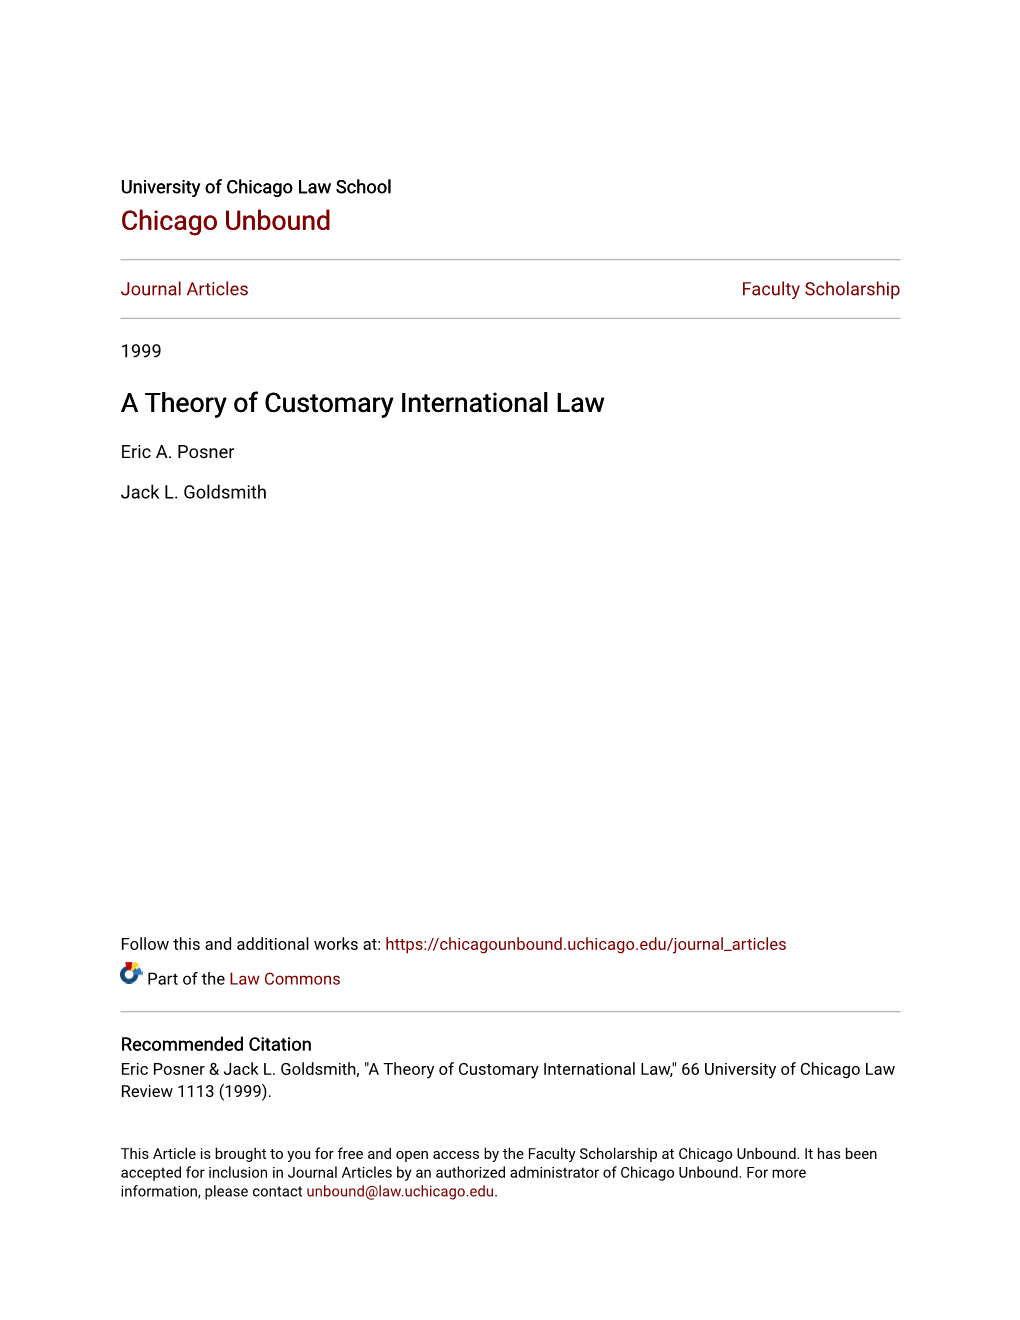 A Theory of Customary International Law